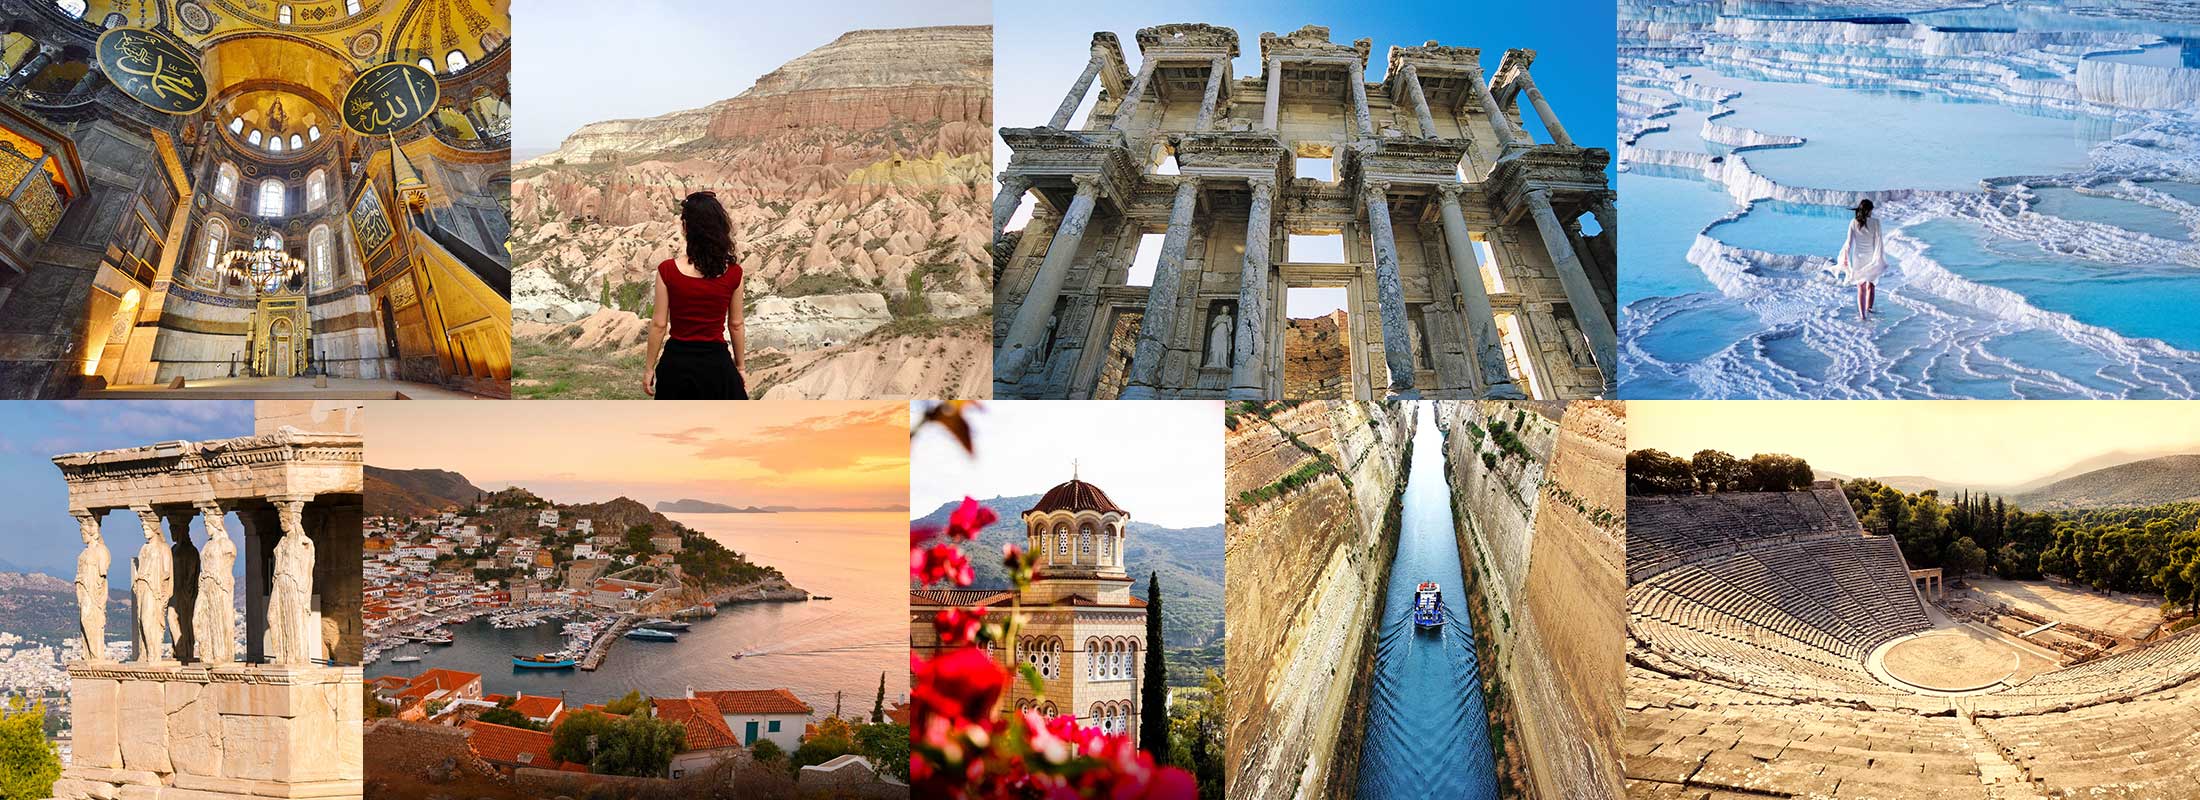 10 DAYS TURKEY GREECE PACKAGE TOUR ISTANBUL CAPPADOCIA EPHESUS PAMUKKALE ATHENS AEGINA HYDRA POROS CORINTO